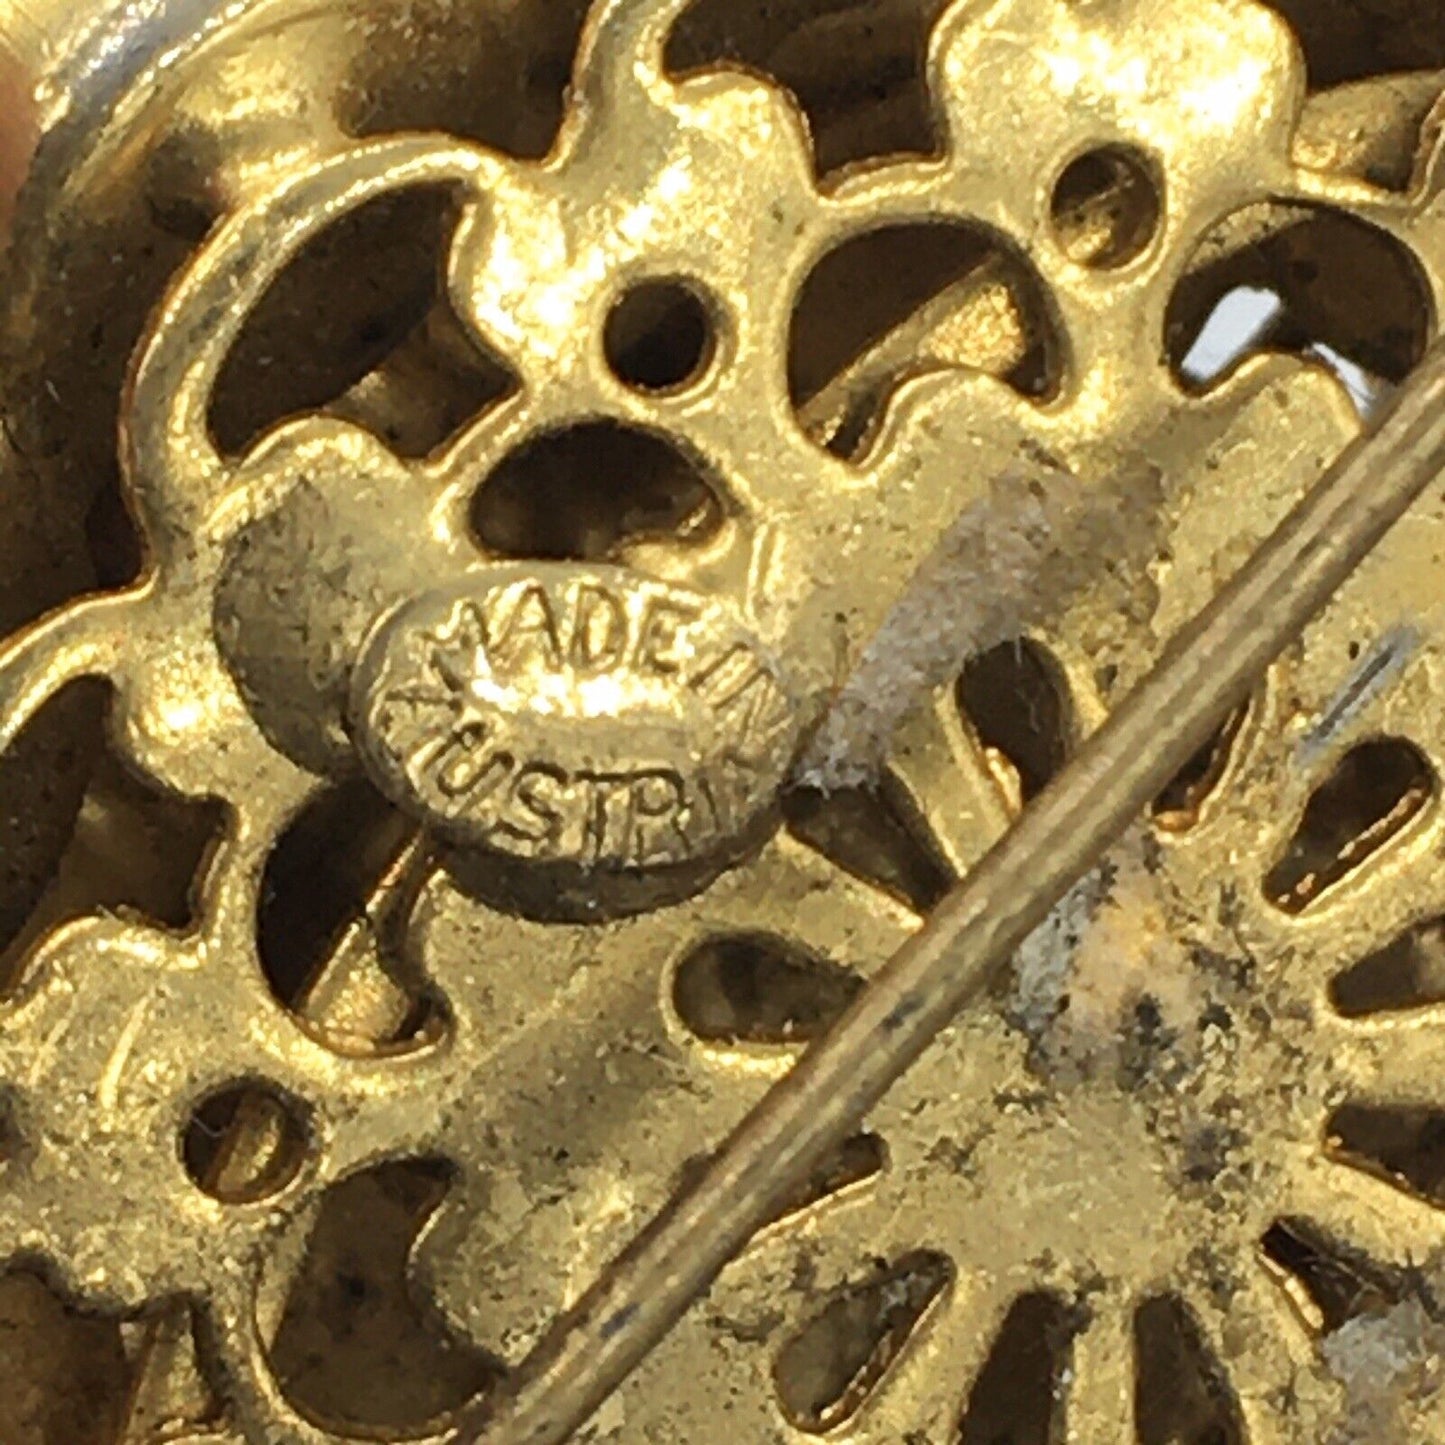 Vintage Austrian Crystals Gold Tone Pin Brooch